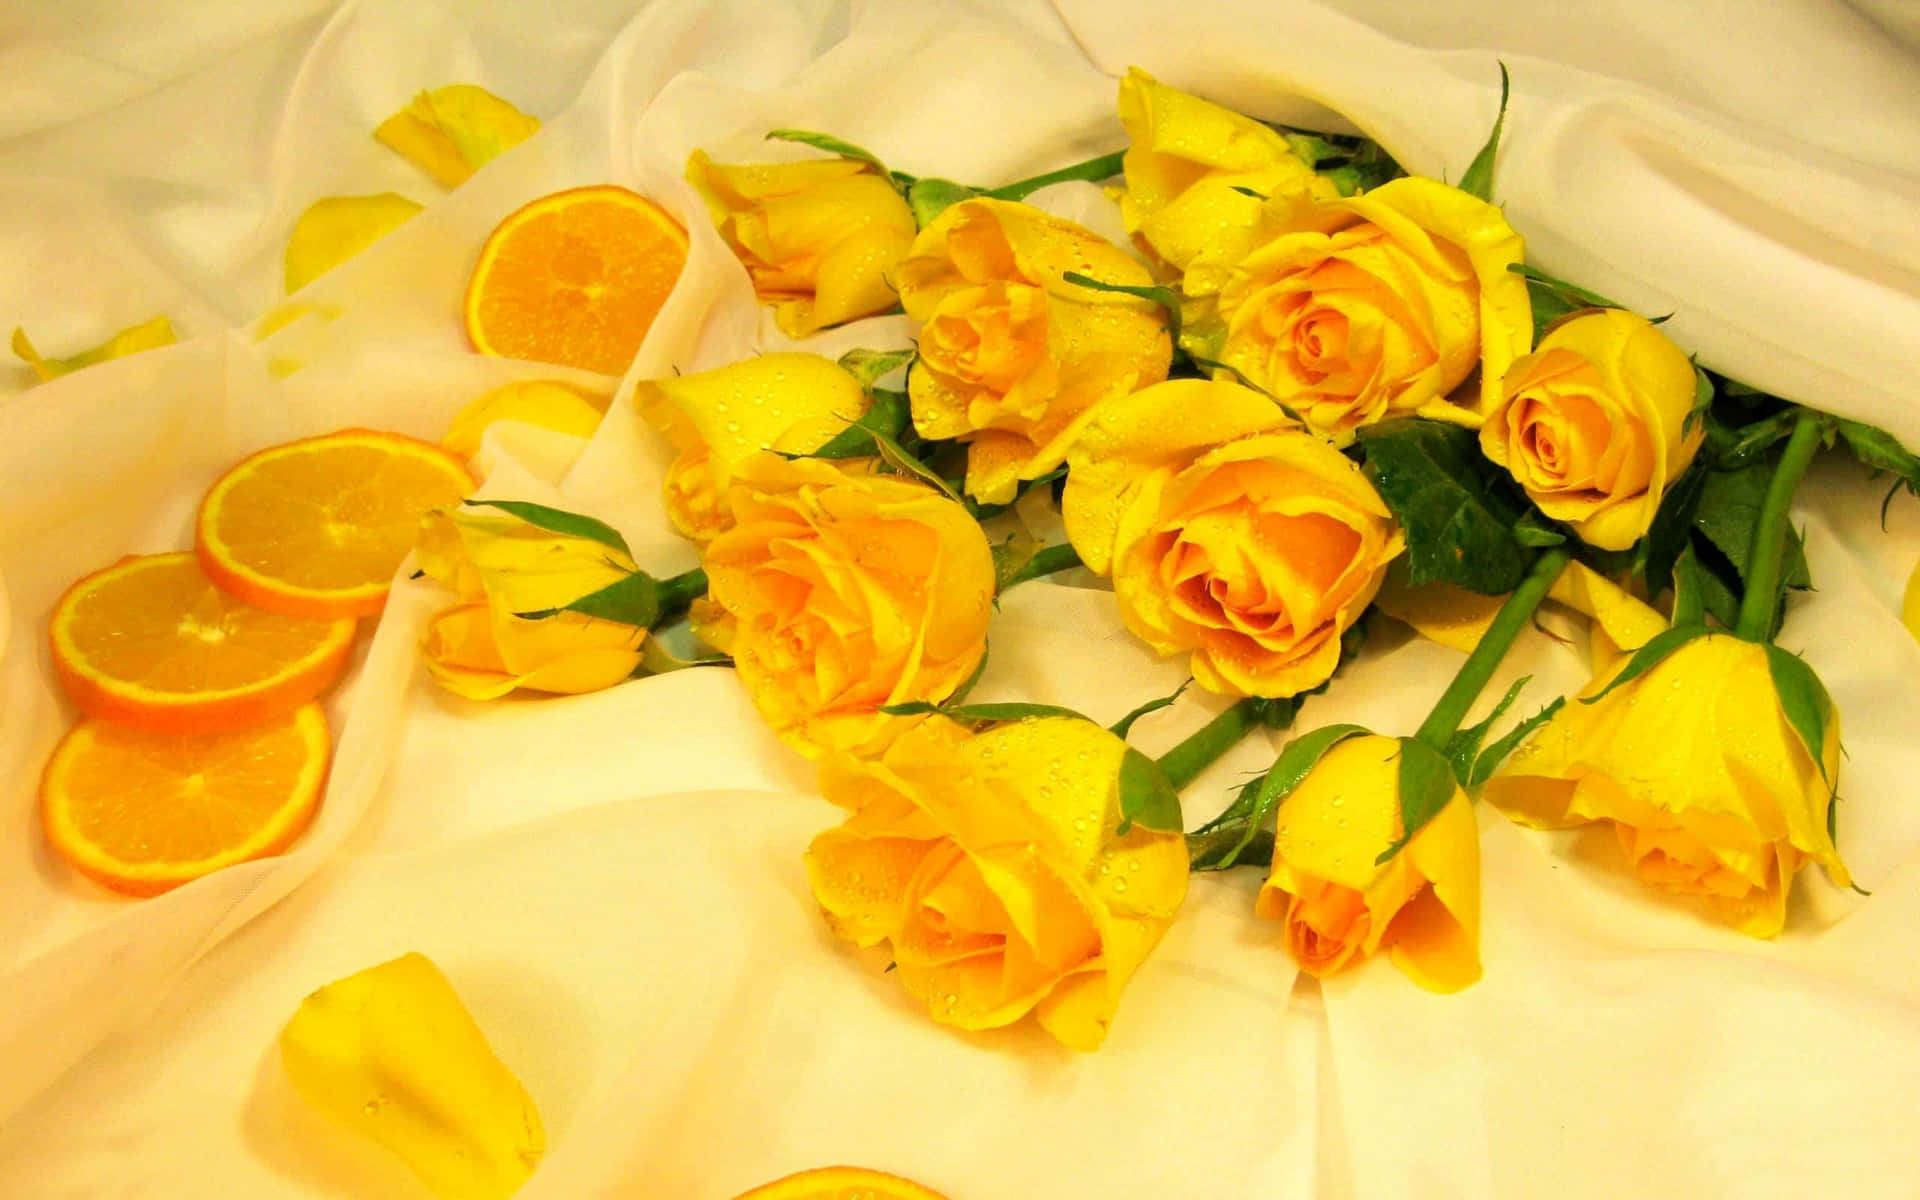 Yellow Aesthetic Desktop Roses And Orange Fruit Slices Wallpaper